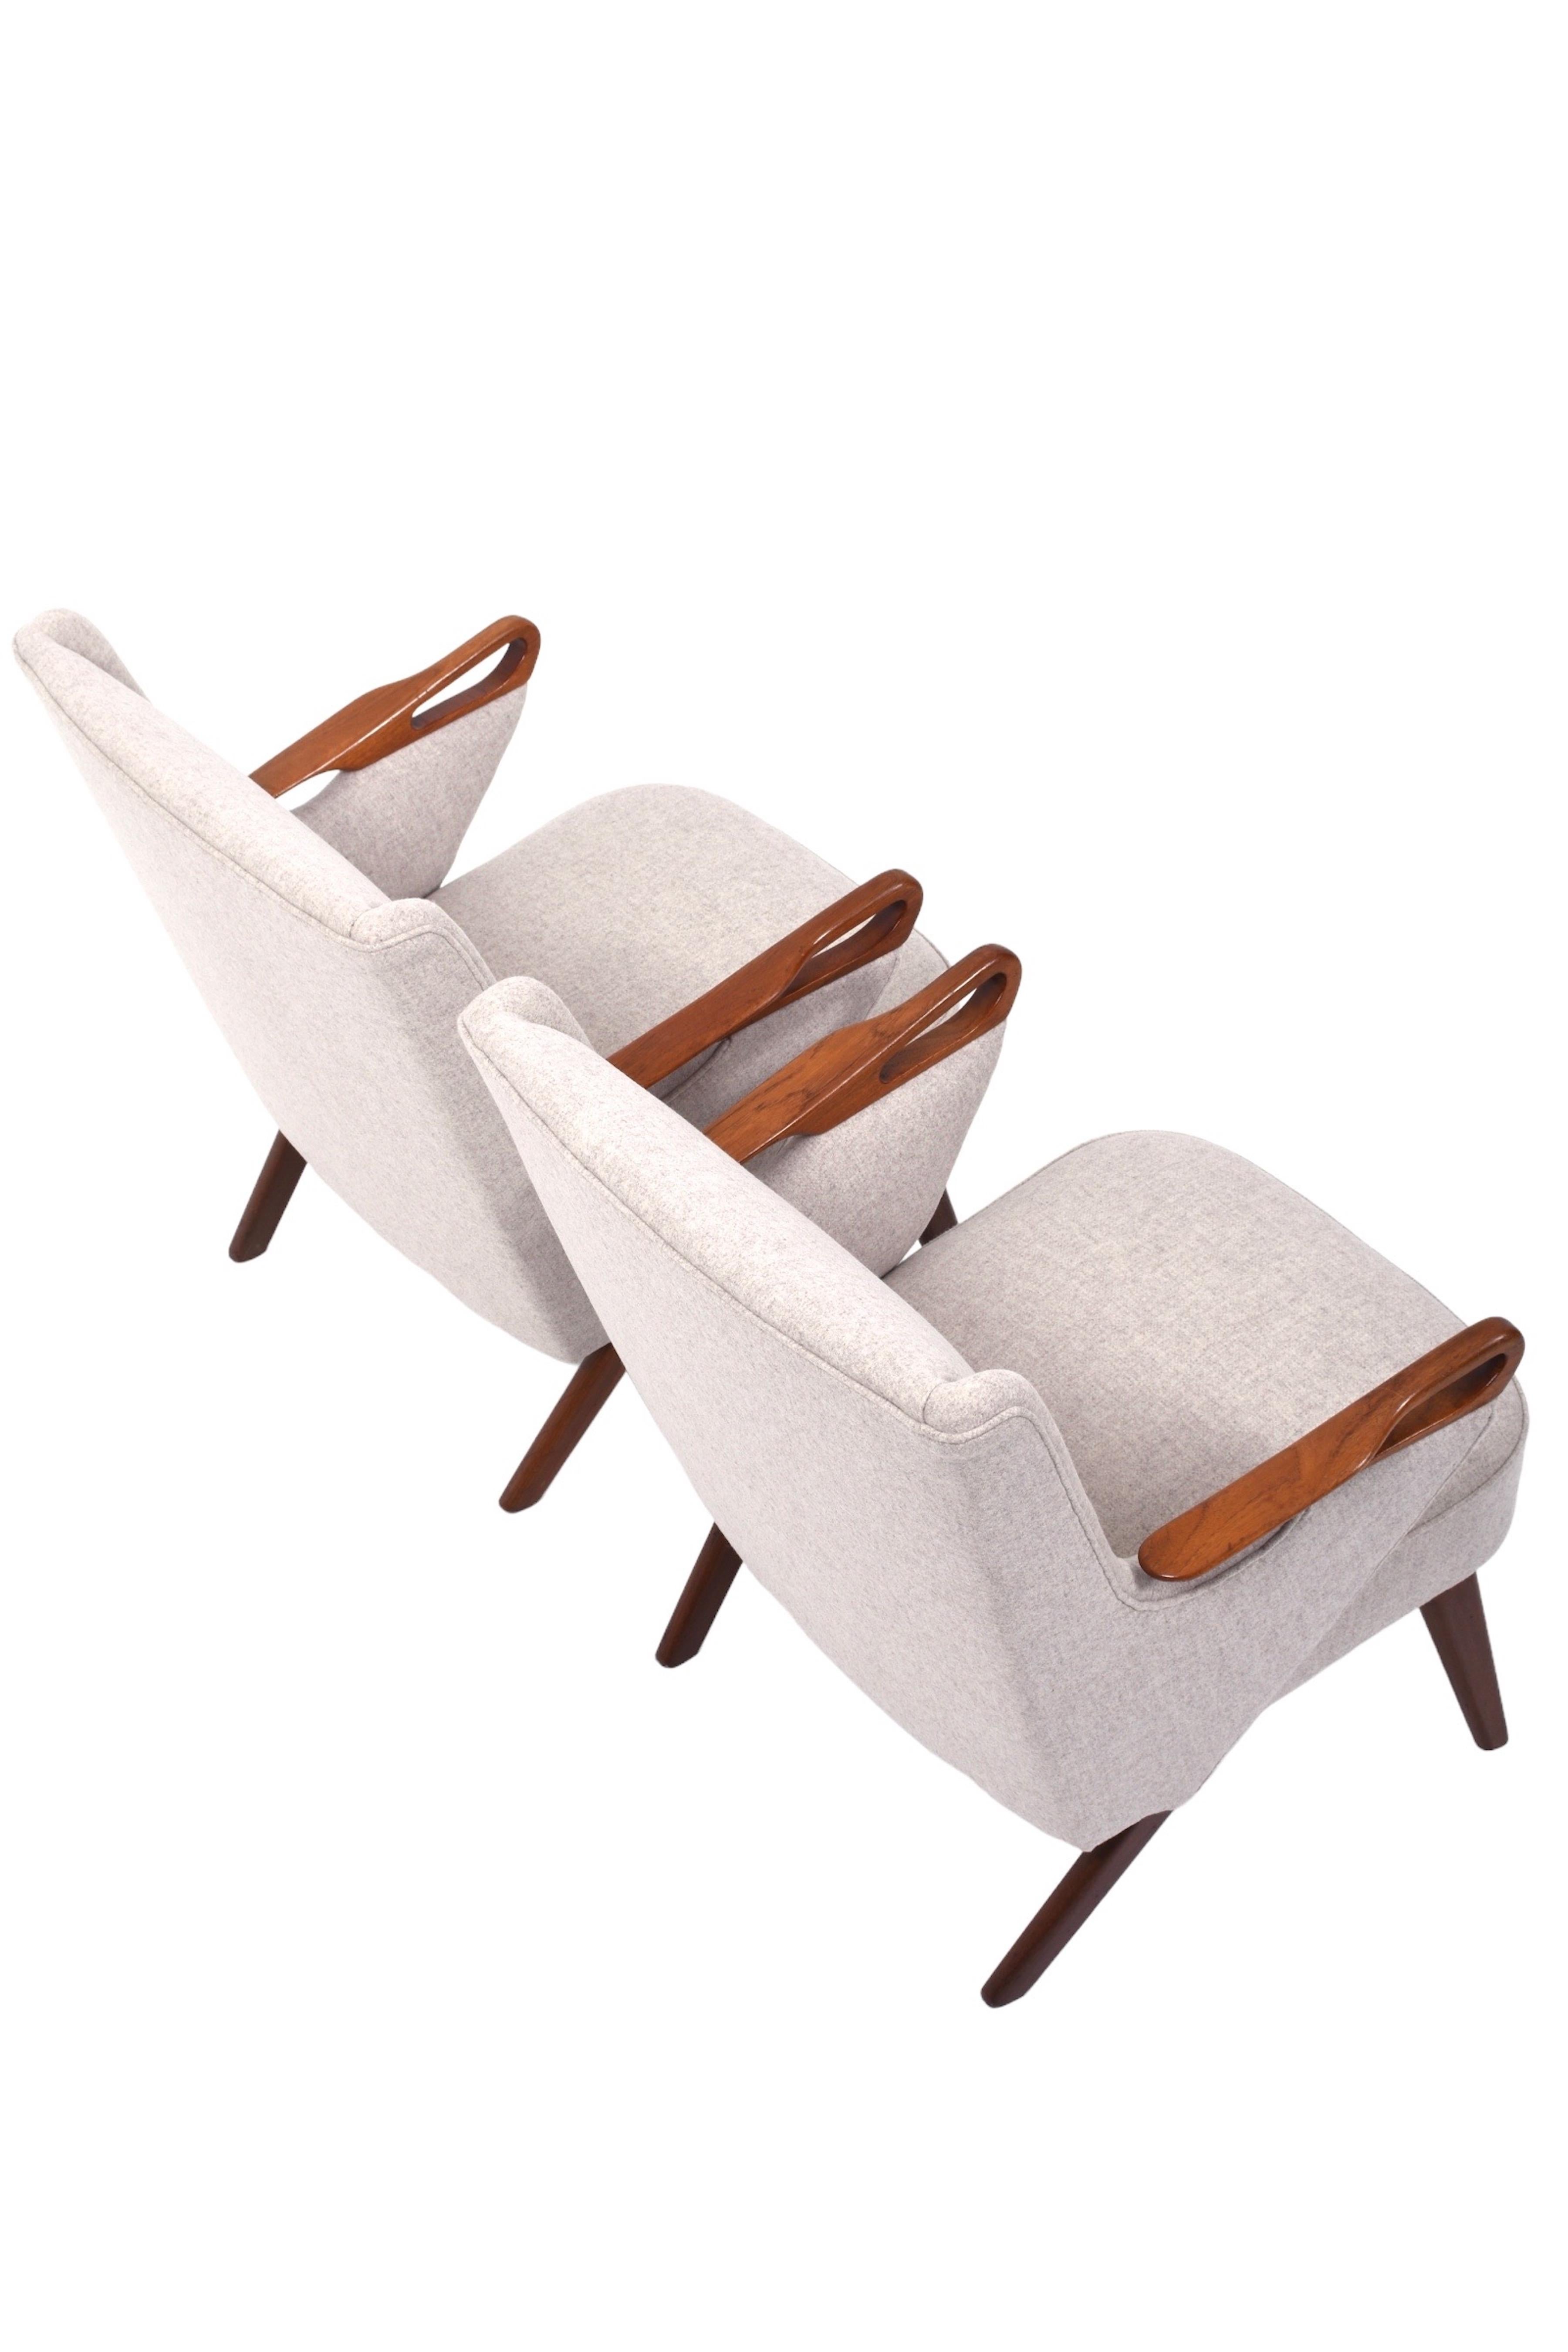 Lounge Chairs by Chresten Findahl Brodersen for Findahl Møbelfabrik, Set of 2 For Sale 3